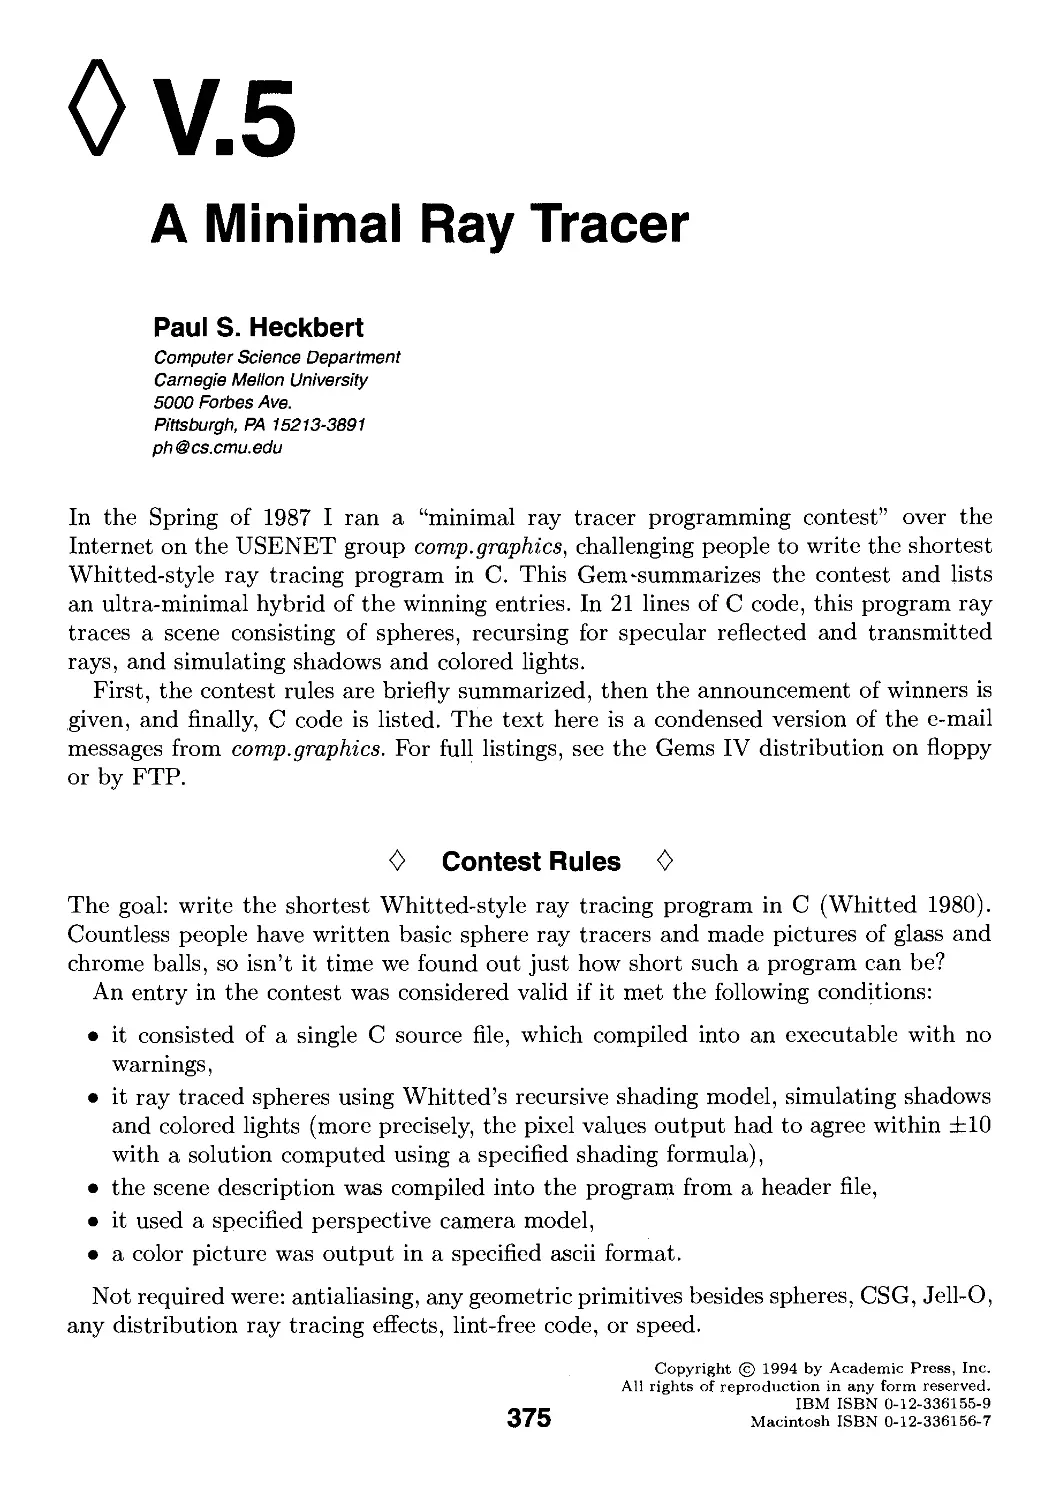 V.5. A Minimal Ray Tracer by Paul S. Heckbert